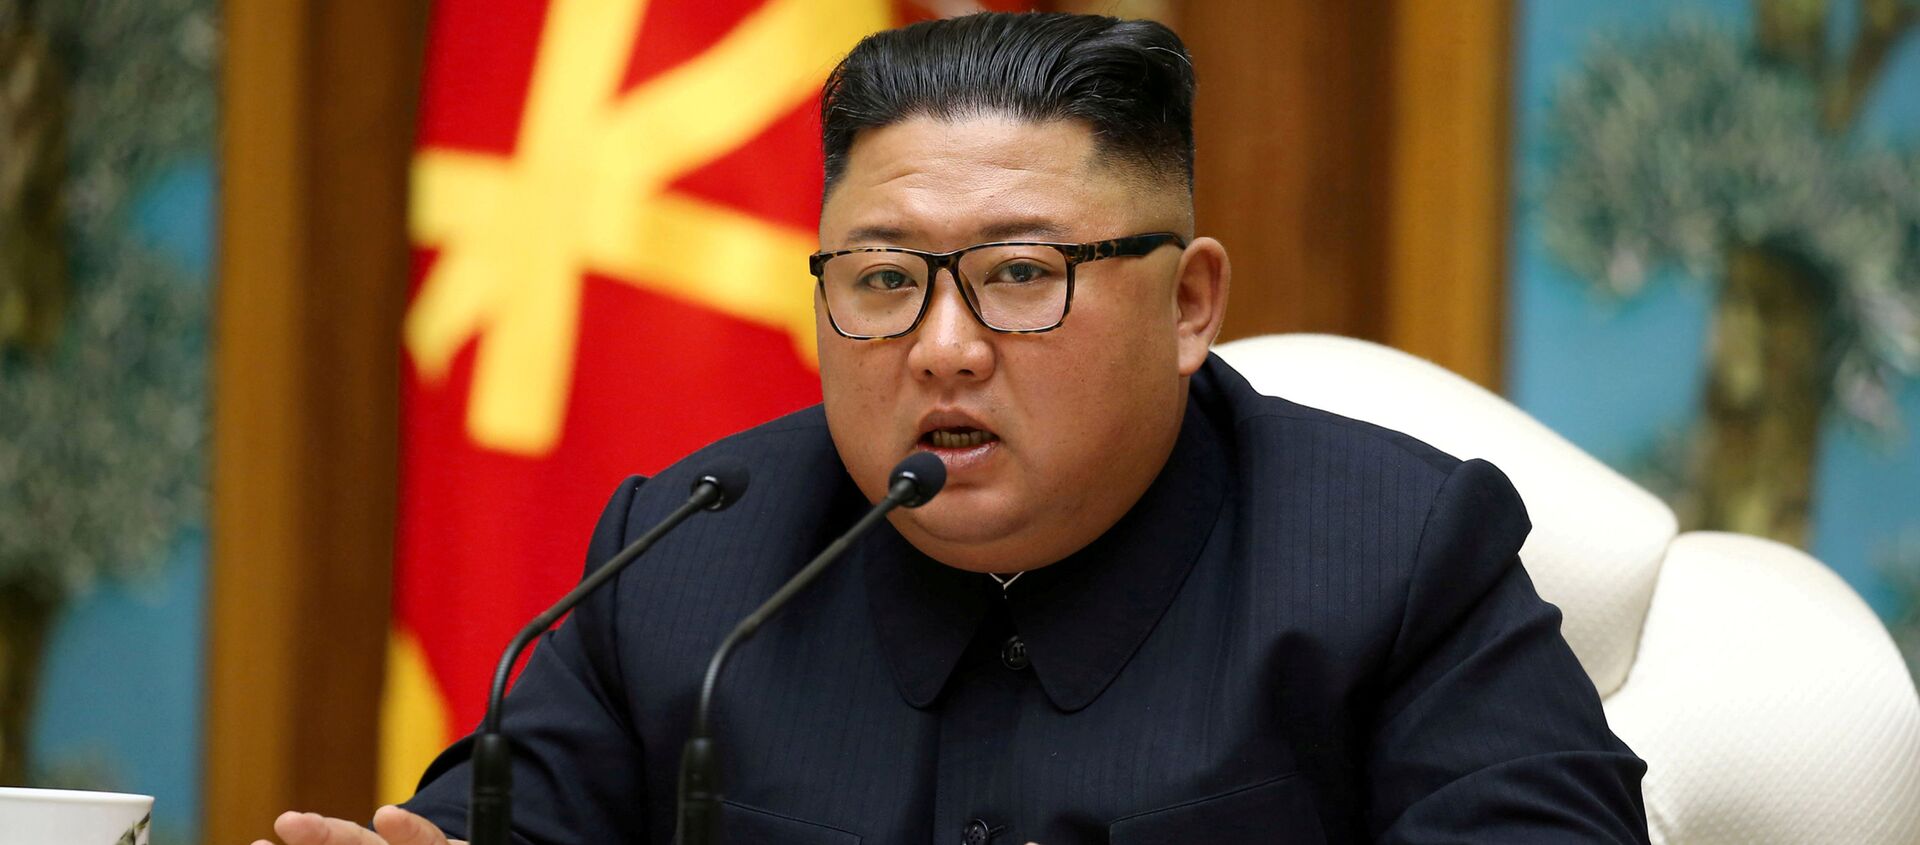 Kim Jong-un, líder de Corea del Norte - Sputnik Mundo, 1920, 21.04.2020